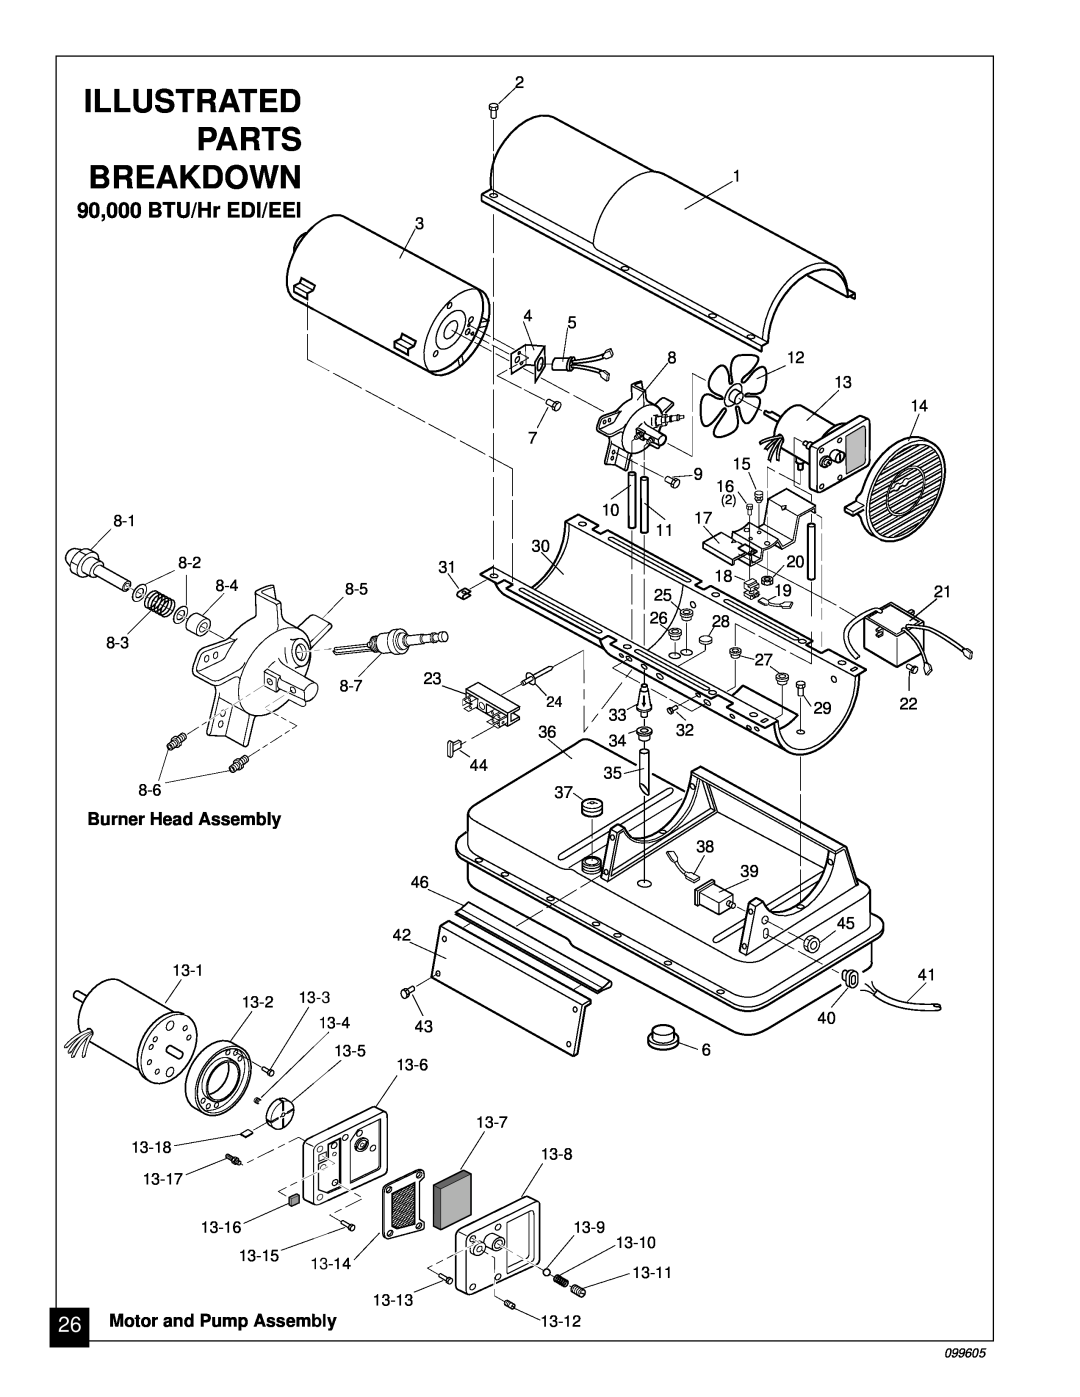 Desa H.S.I. Series 90,000 BTU/Hr EDI/EEI, Parts, Breakdown, Illustrated, Burner Head Assembly, Motor and Pump Assembly 